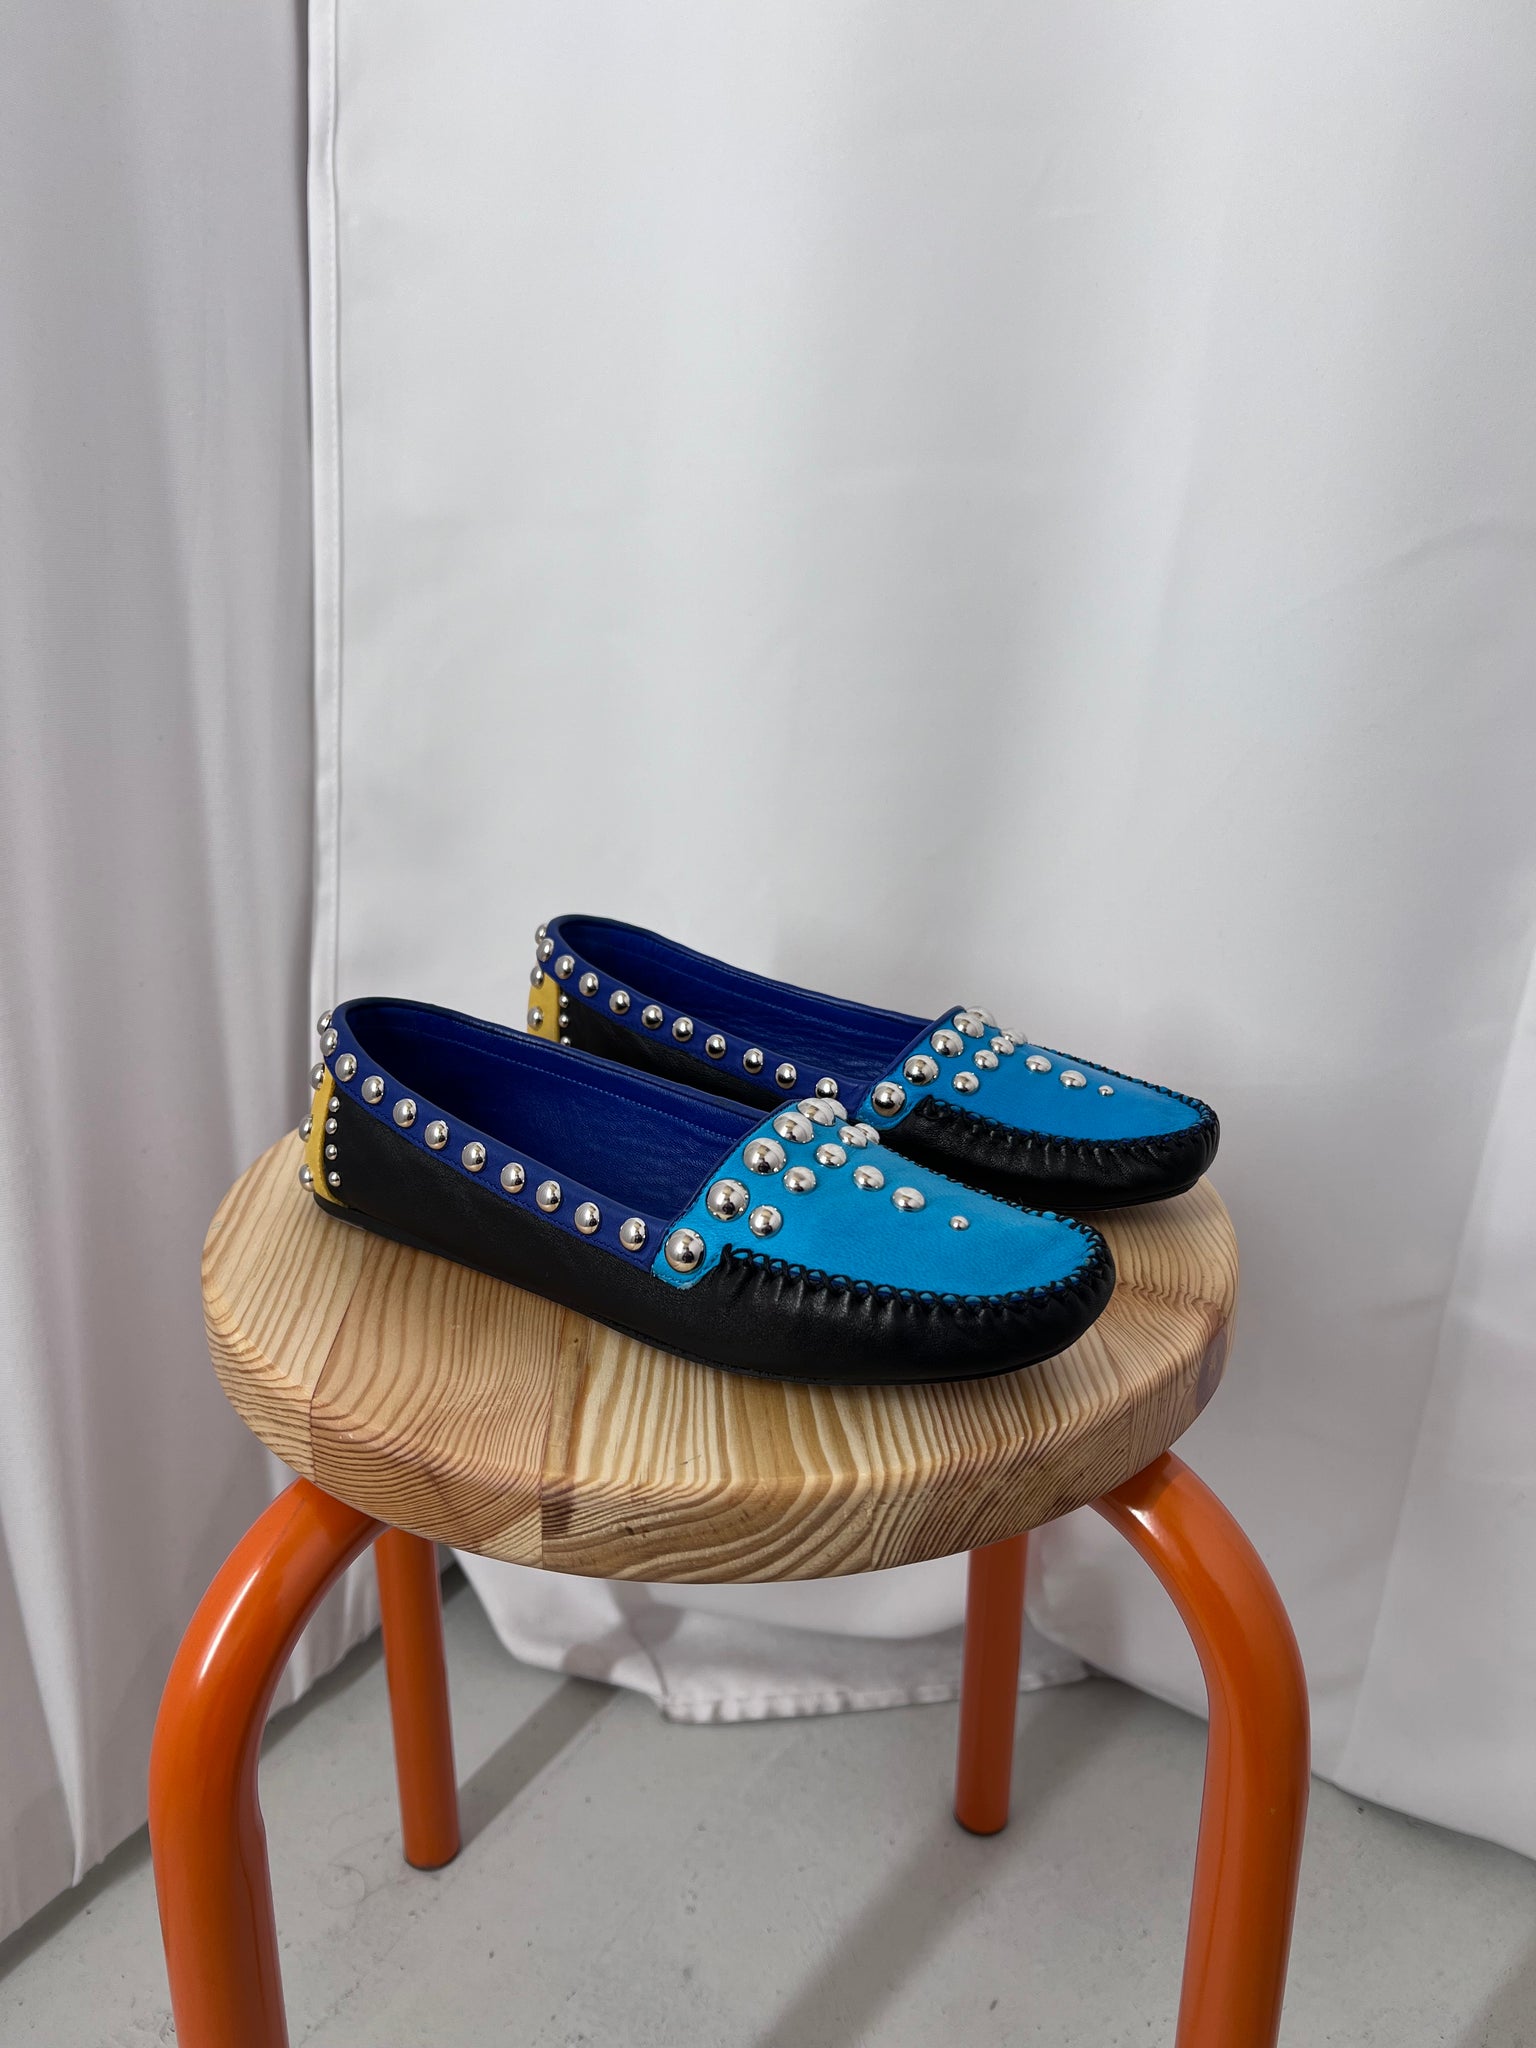 Prada Calzature Multicolored Studded Leather Loafers (9.5)